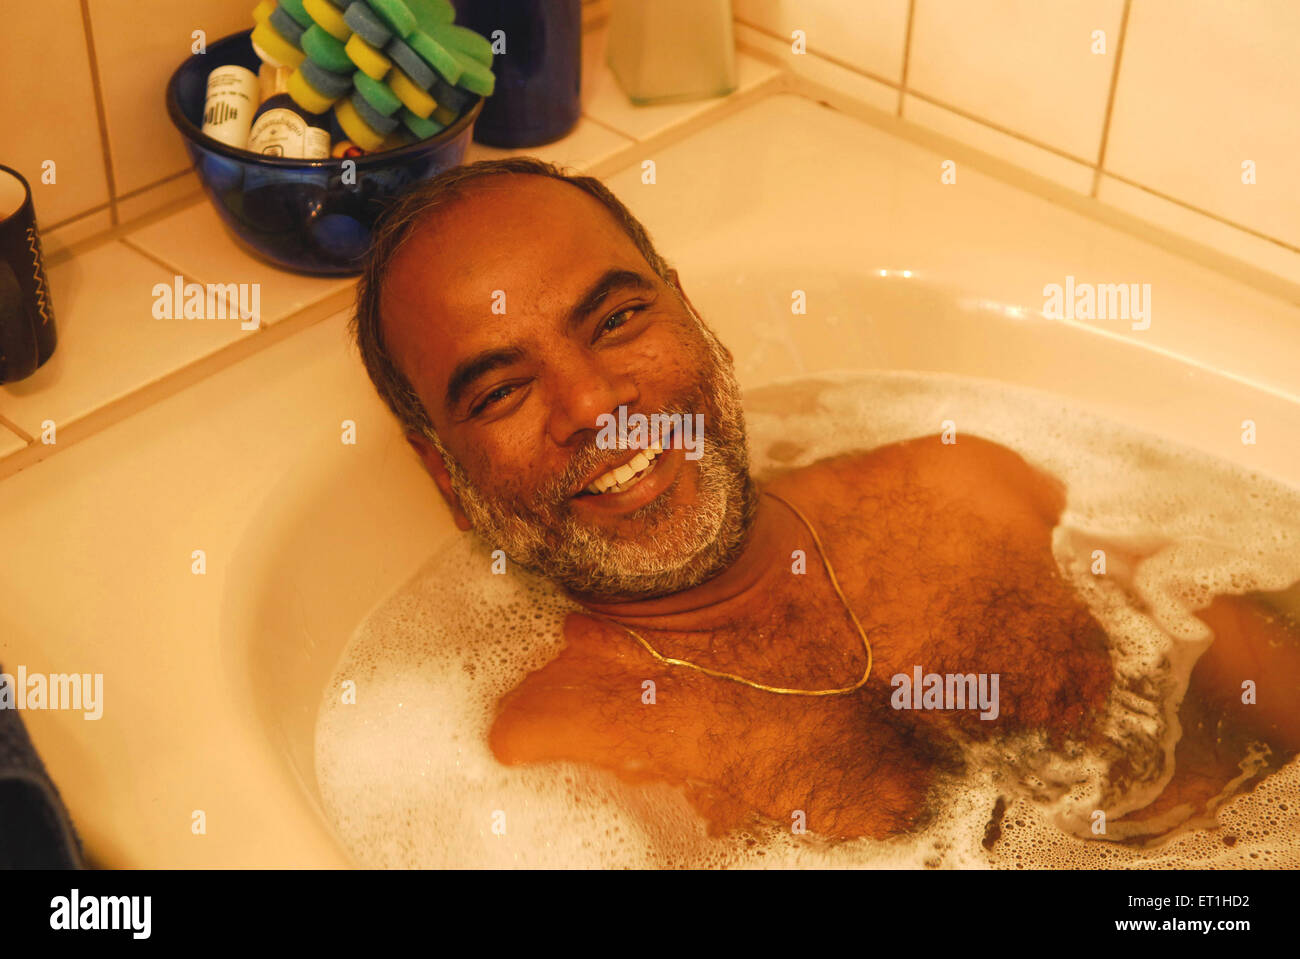 Sudharak Olwe photographer soaking in bath tub, India MR#400 Stock Photo